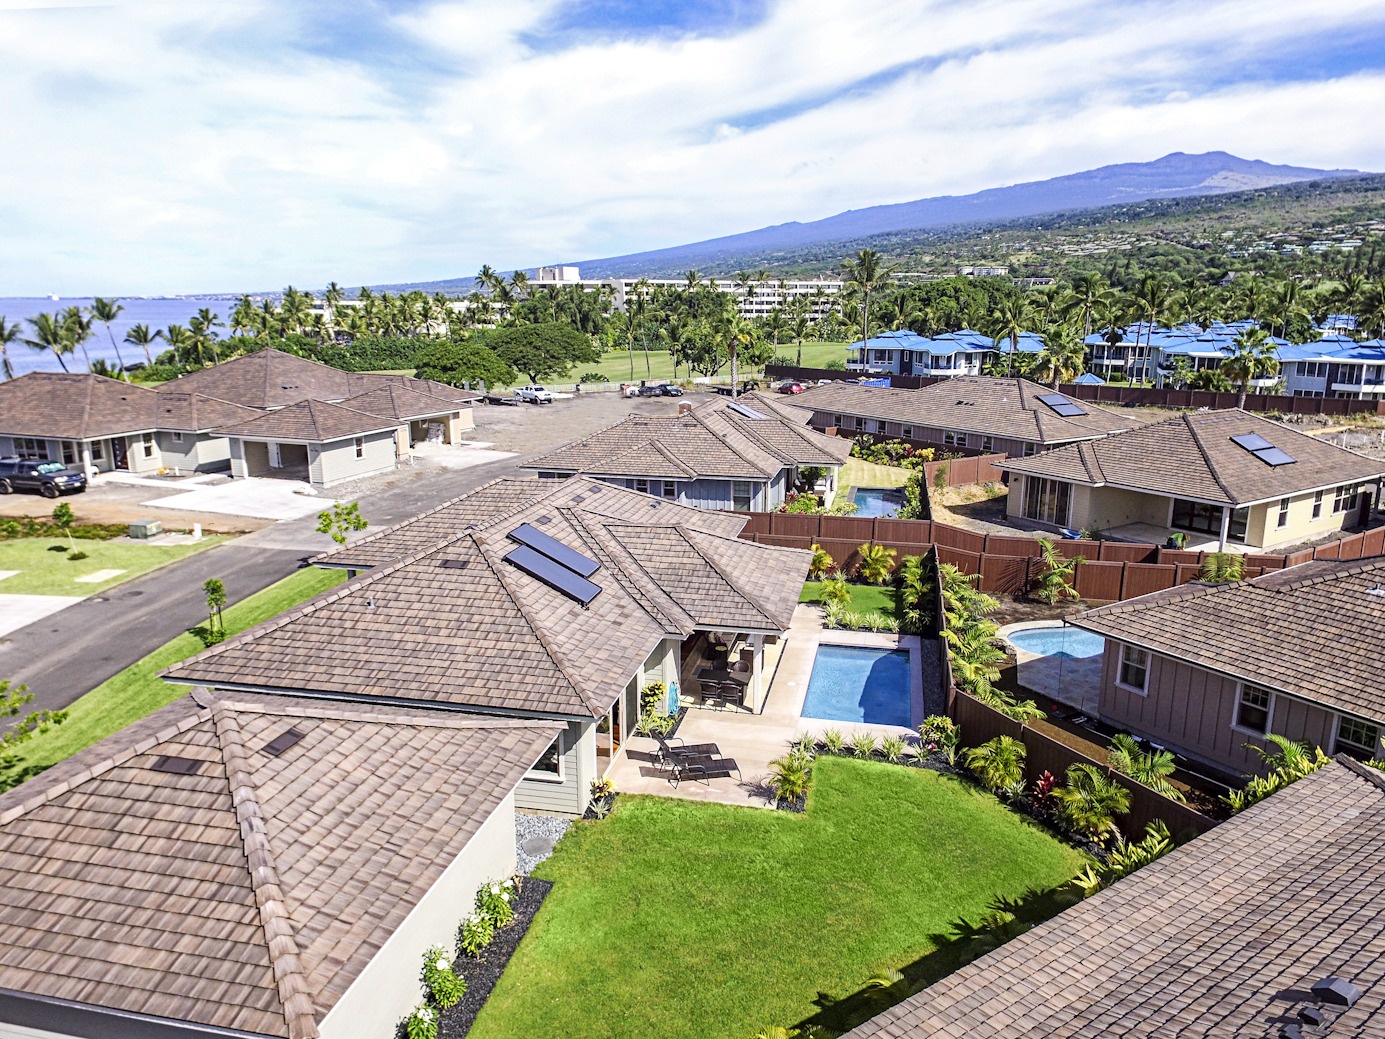 Kailua Kona Vacation Rentals, Holua Kai #32 - Aerial view of the home